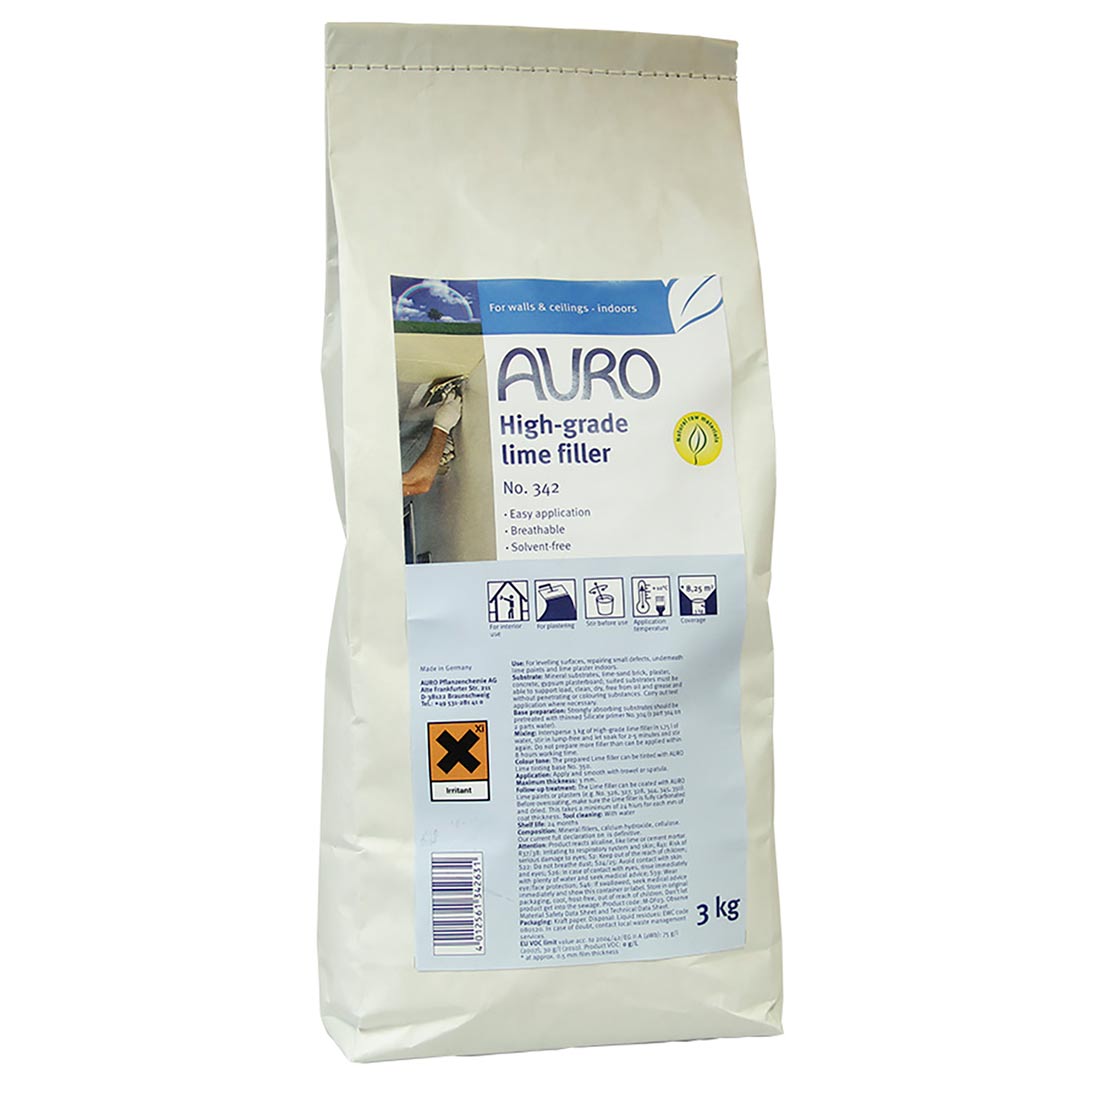 Auro 342 - High Grade Lime Filler for Wall repair